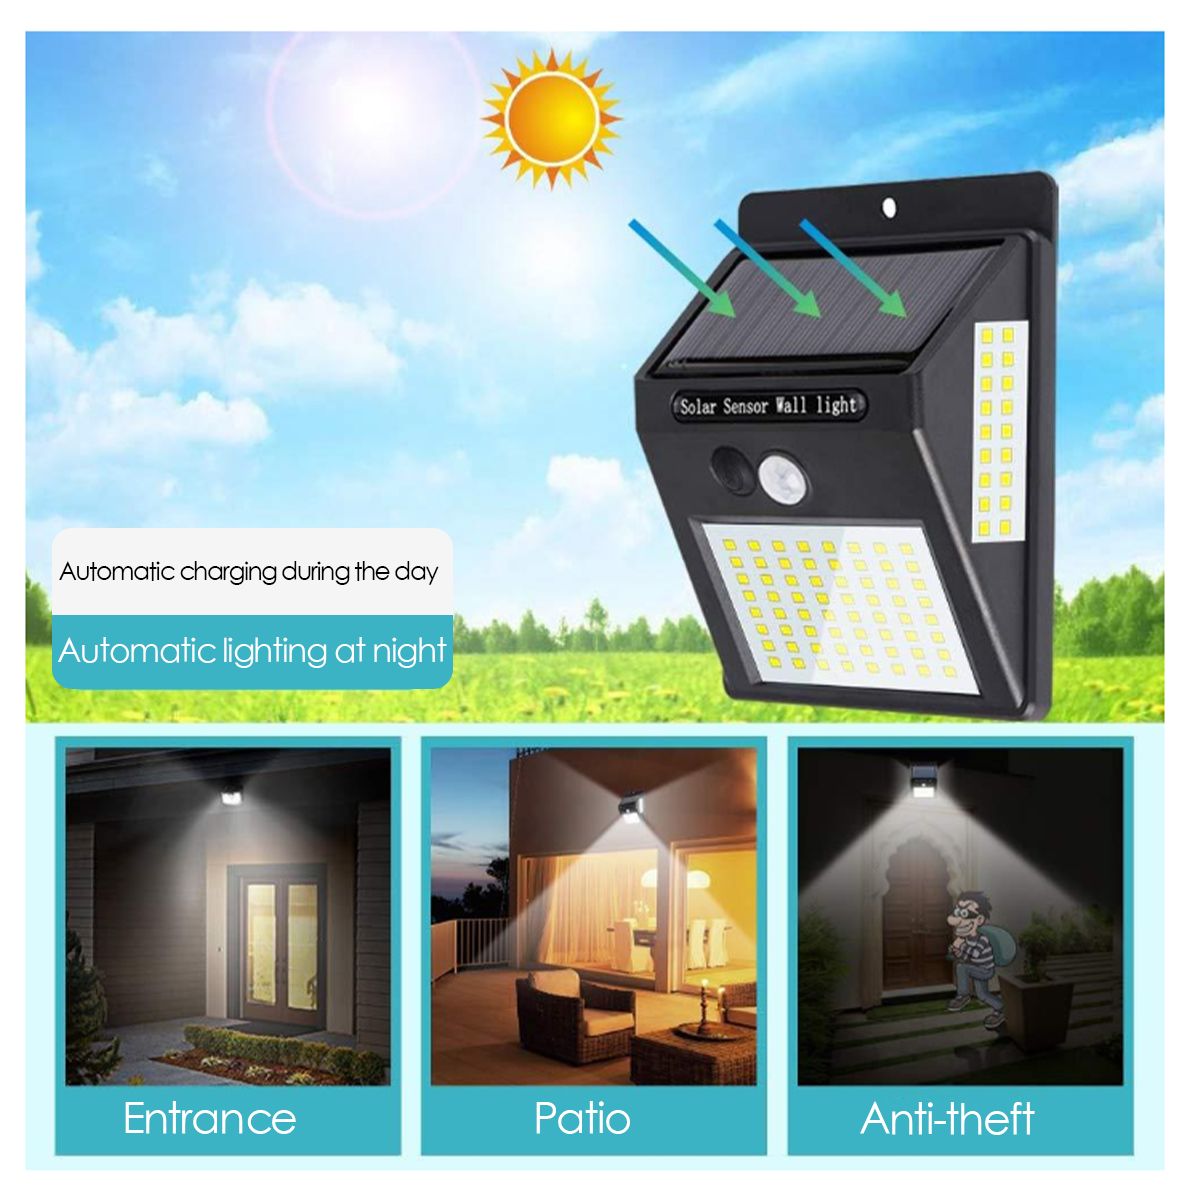 Motion-Sensor-LED-Solar-Light-Human-Body-Induction-Waterproof-Outdoor-Garden-Street-Wall-Lamp-1693001